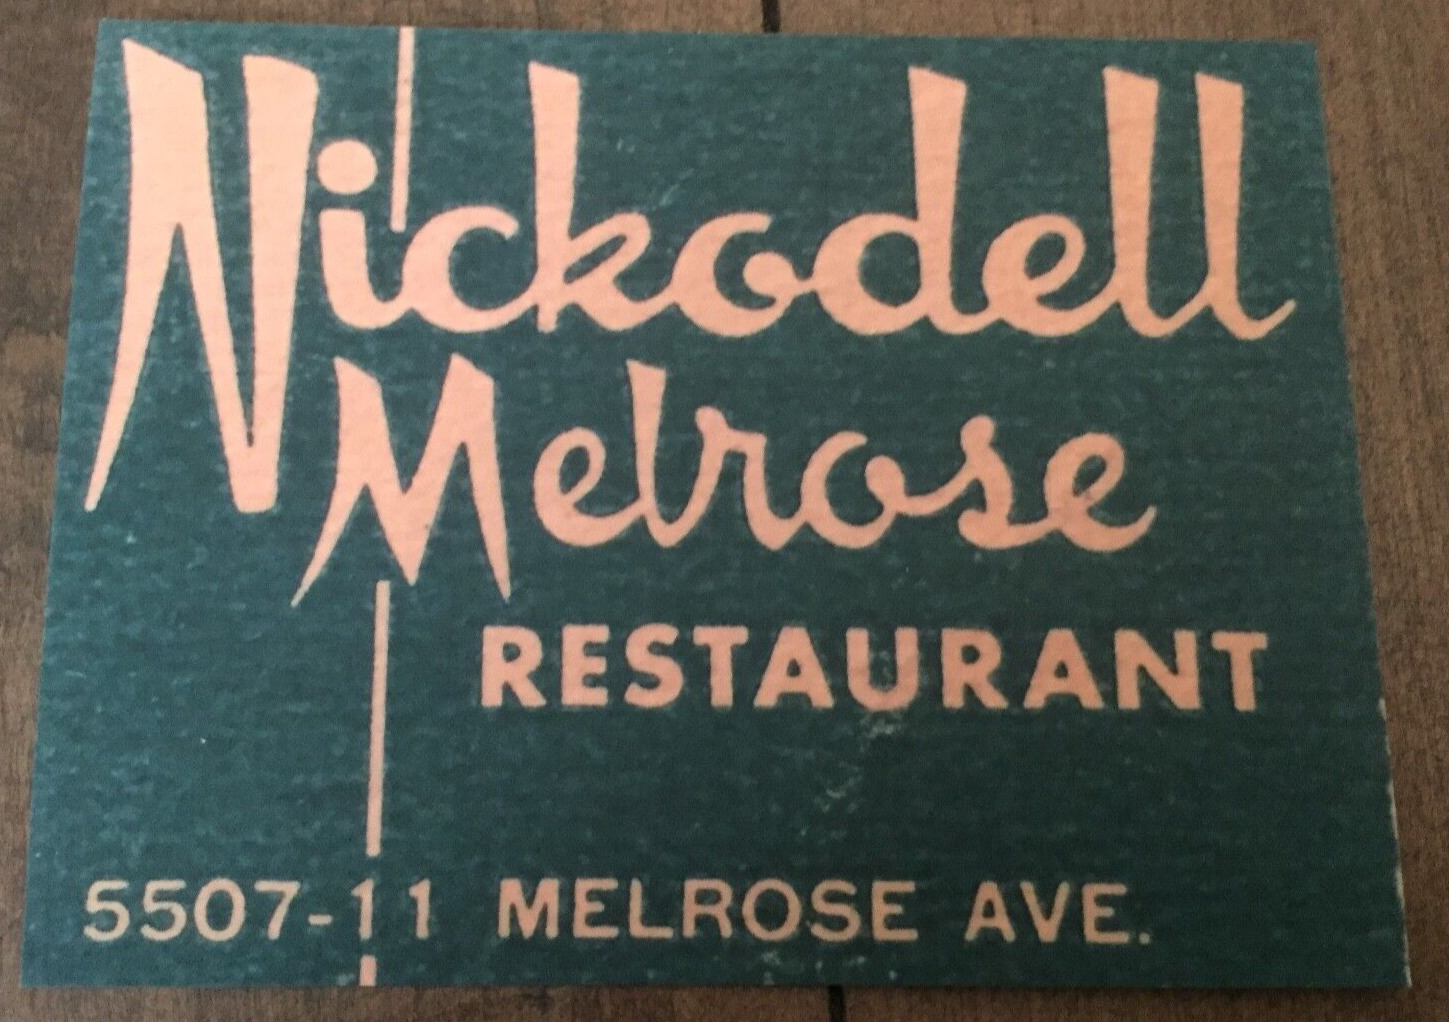 Nickodell Restaurant - Melrose Ave - Los Angeles, Ca. postcard - see listing